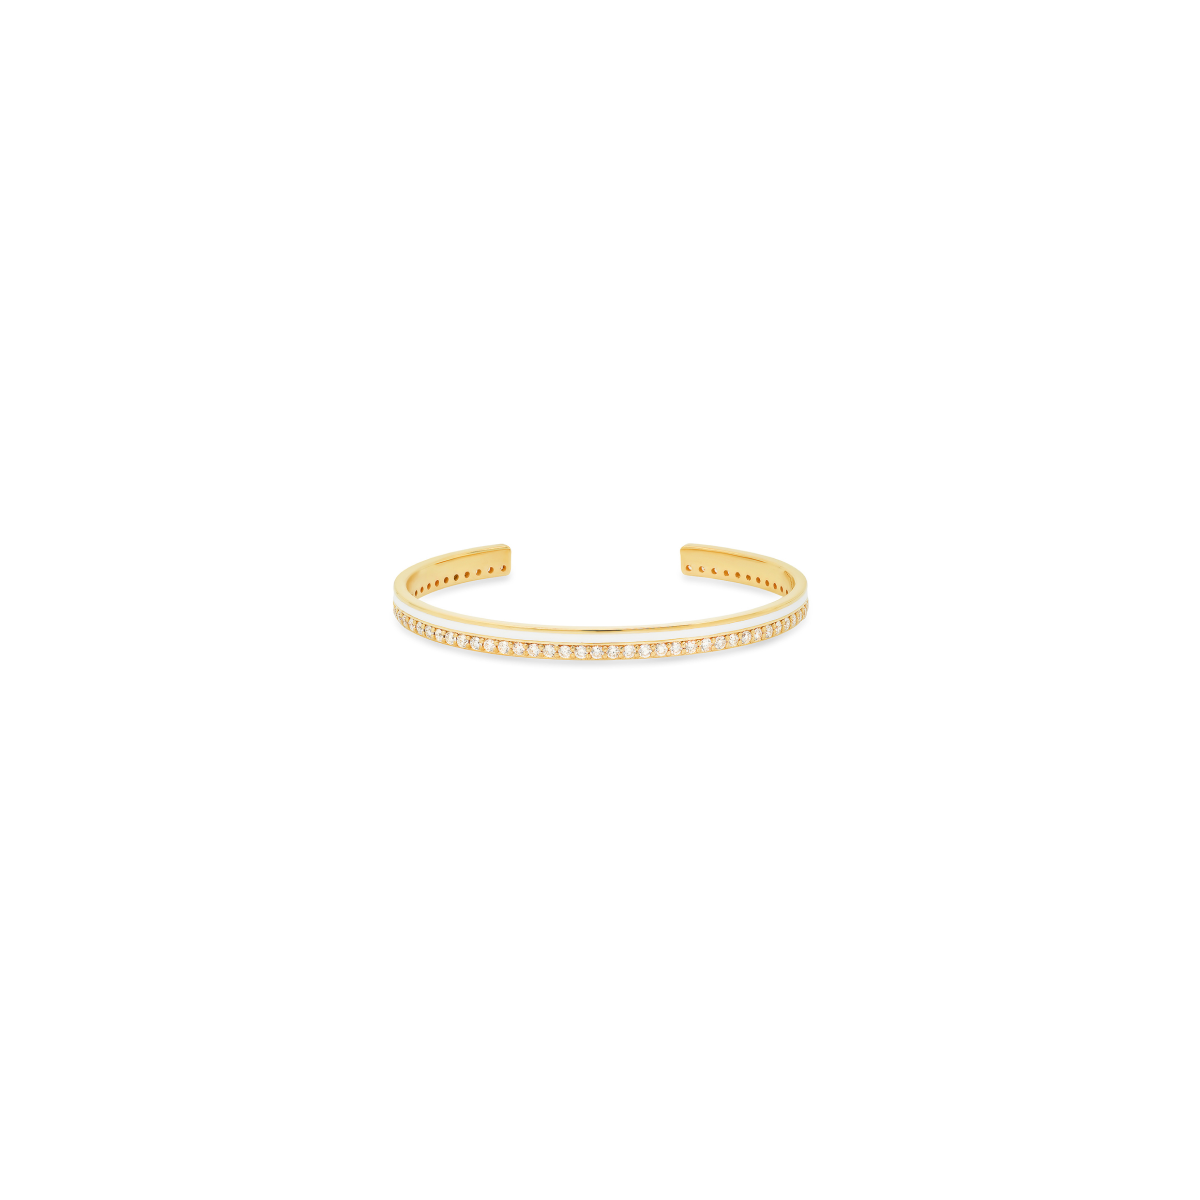 Colette Jewelry bracelet